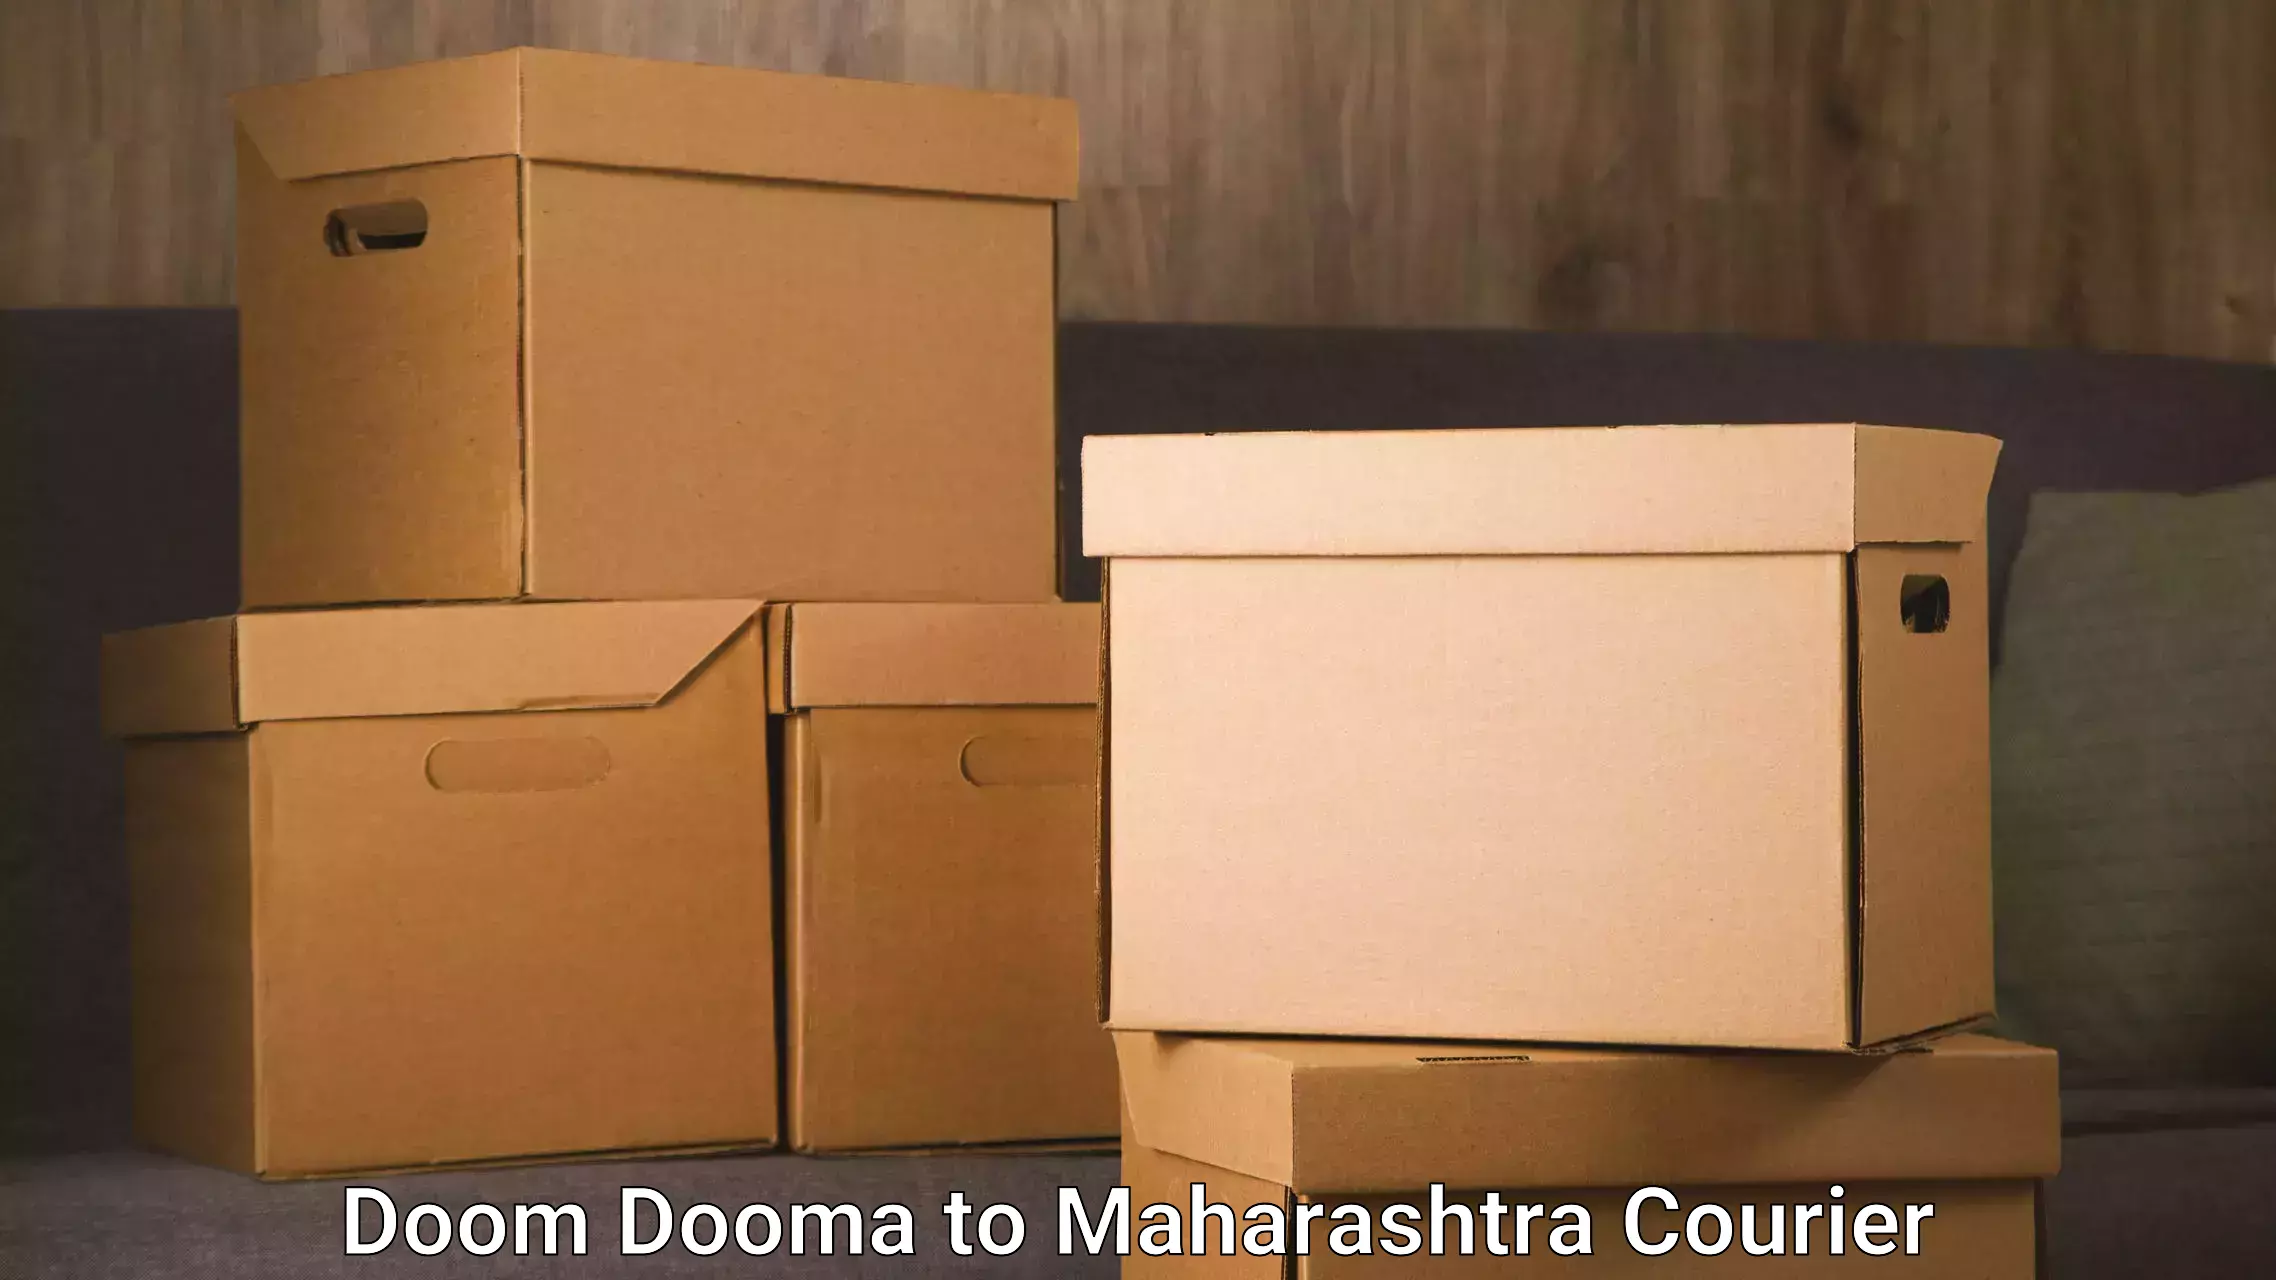 Courier service partnerships Doom Dooma to IIT Mumbai